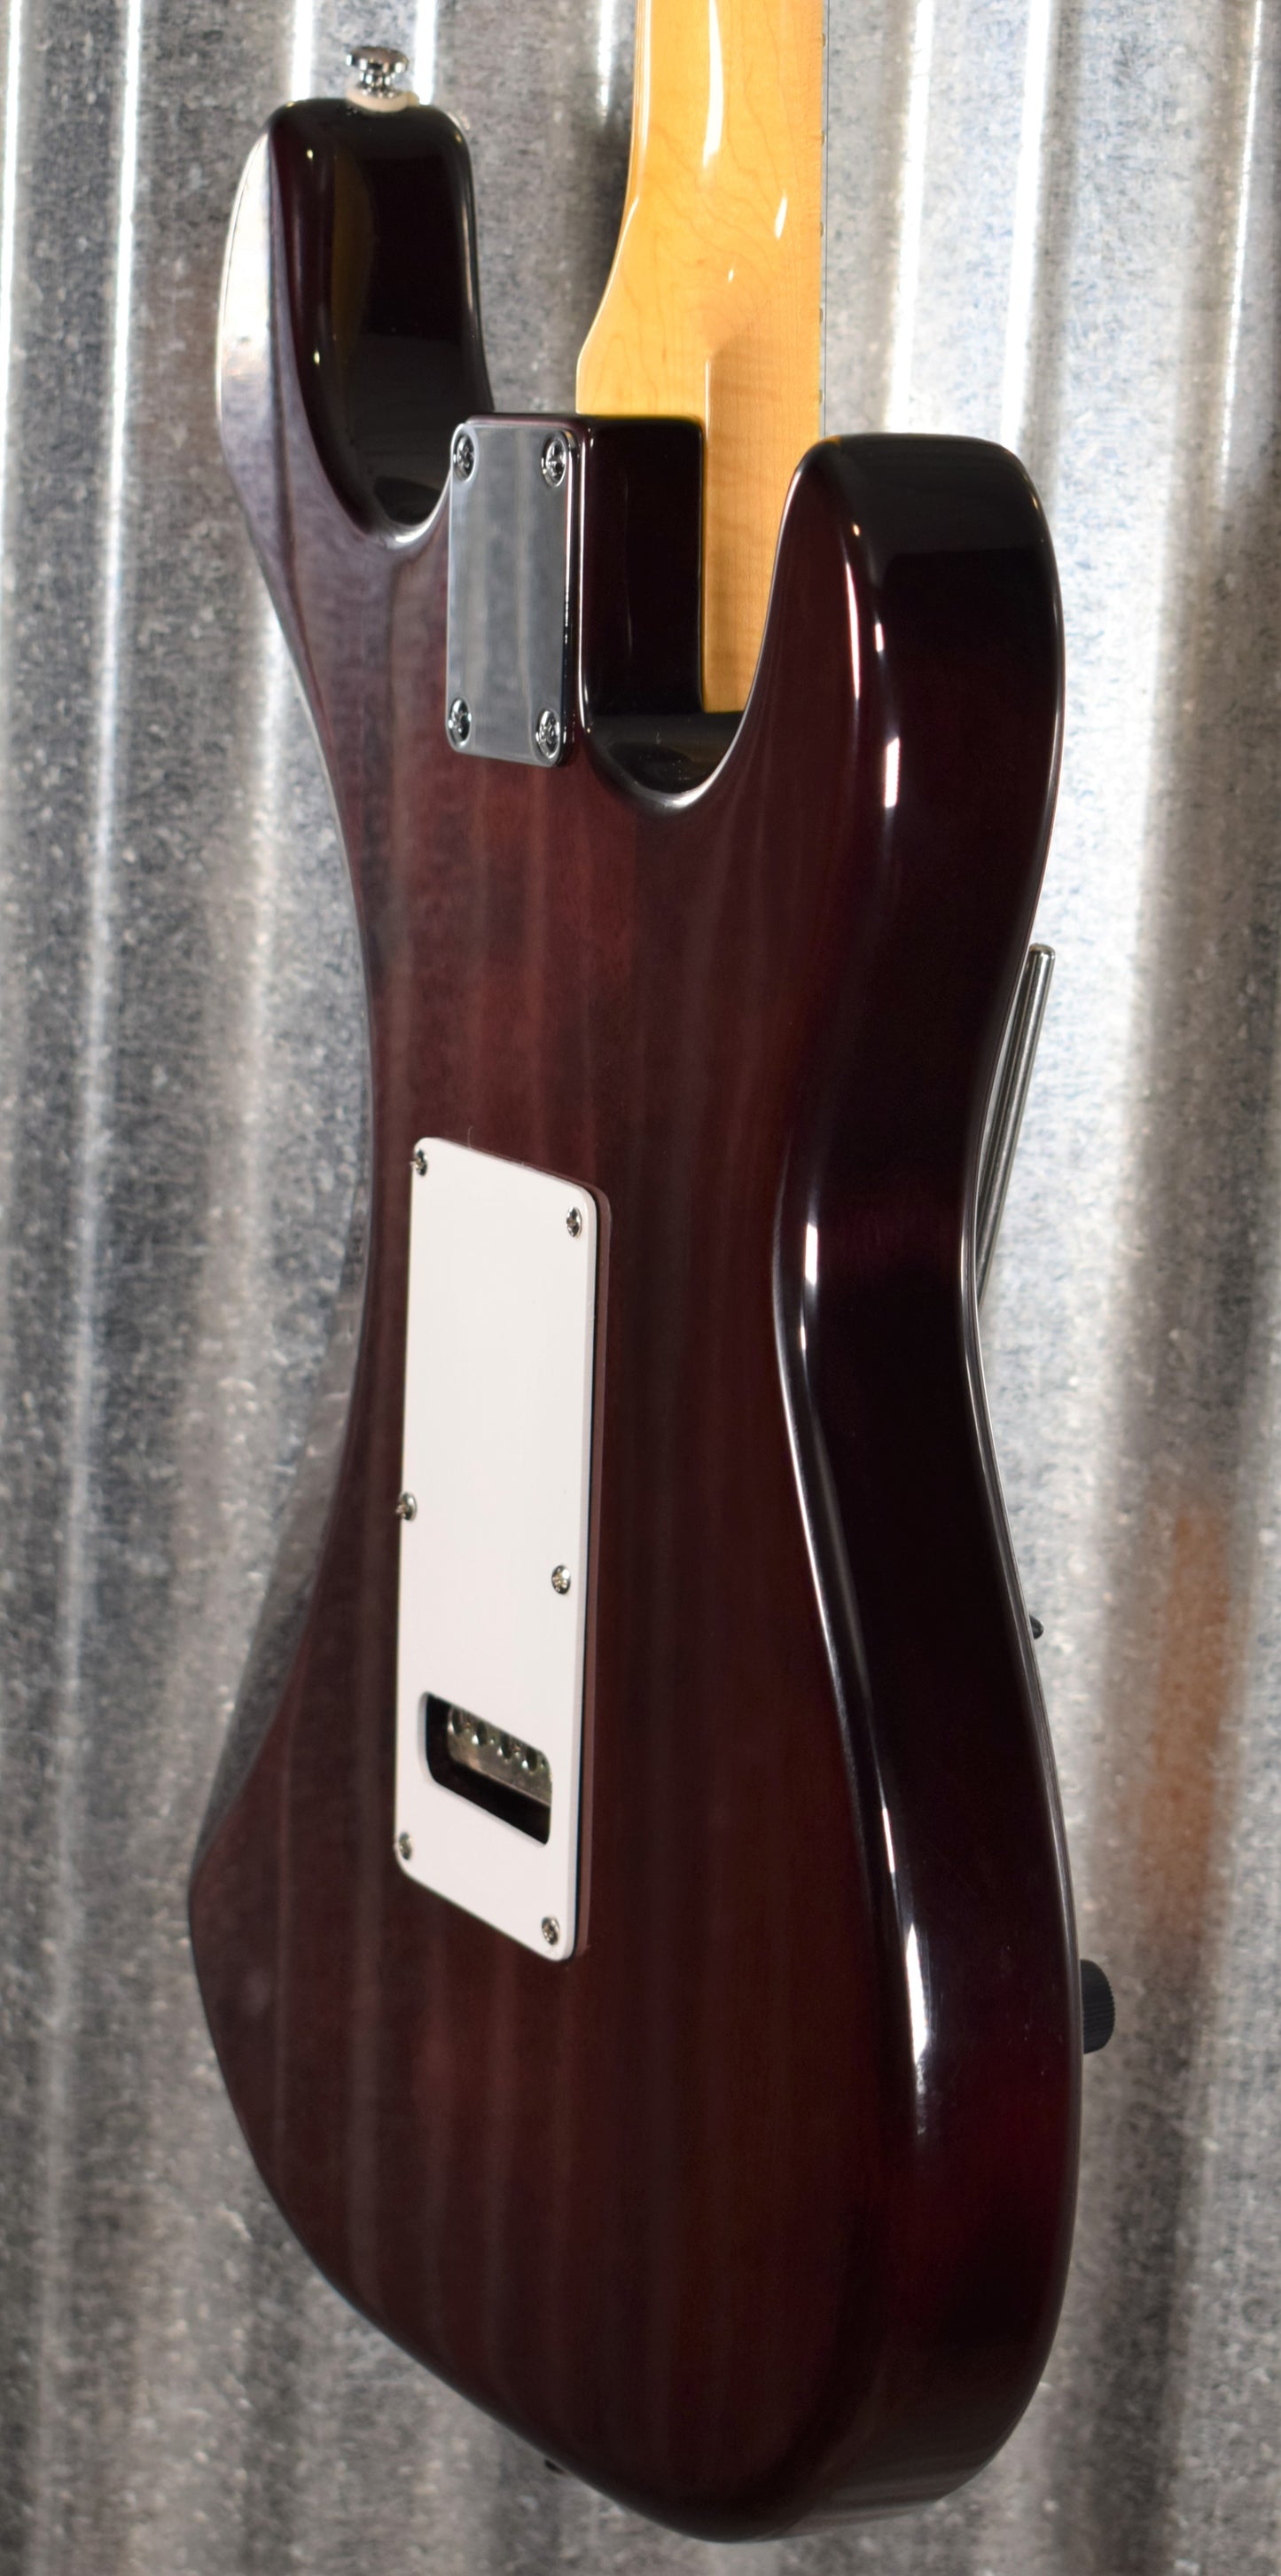 G&L Tribute S-500 Tobacco Sunburst Guitar Left Hand #1358 Demo